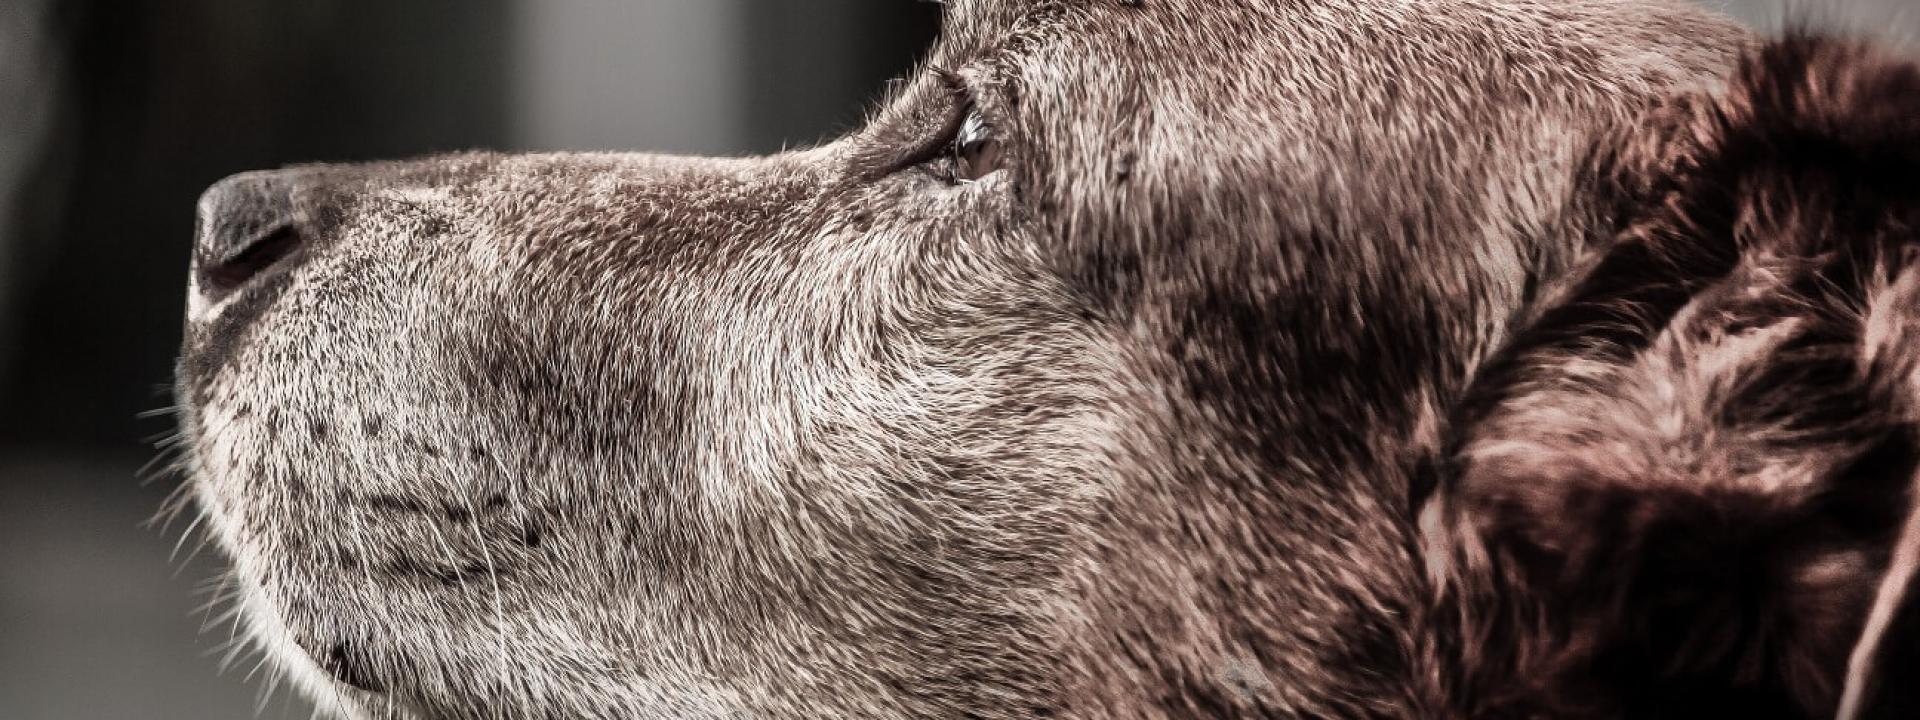 Grey-faced dog